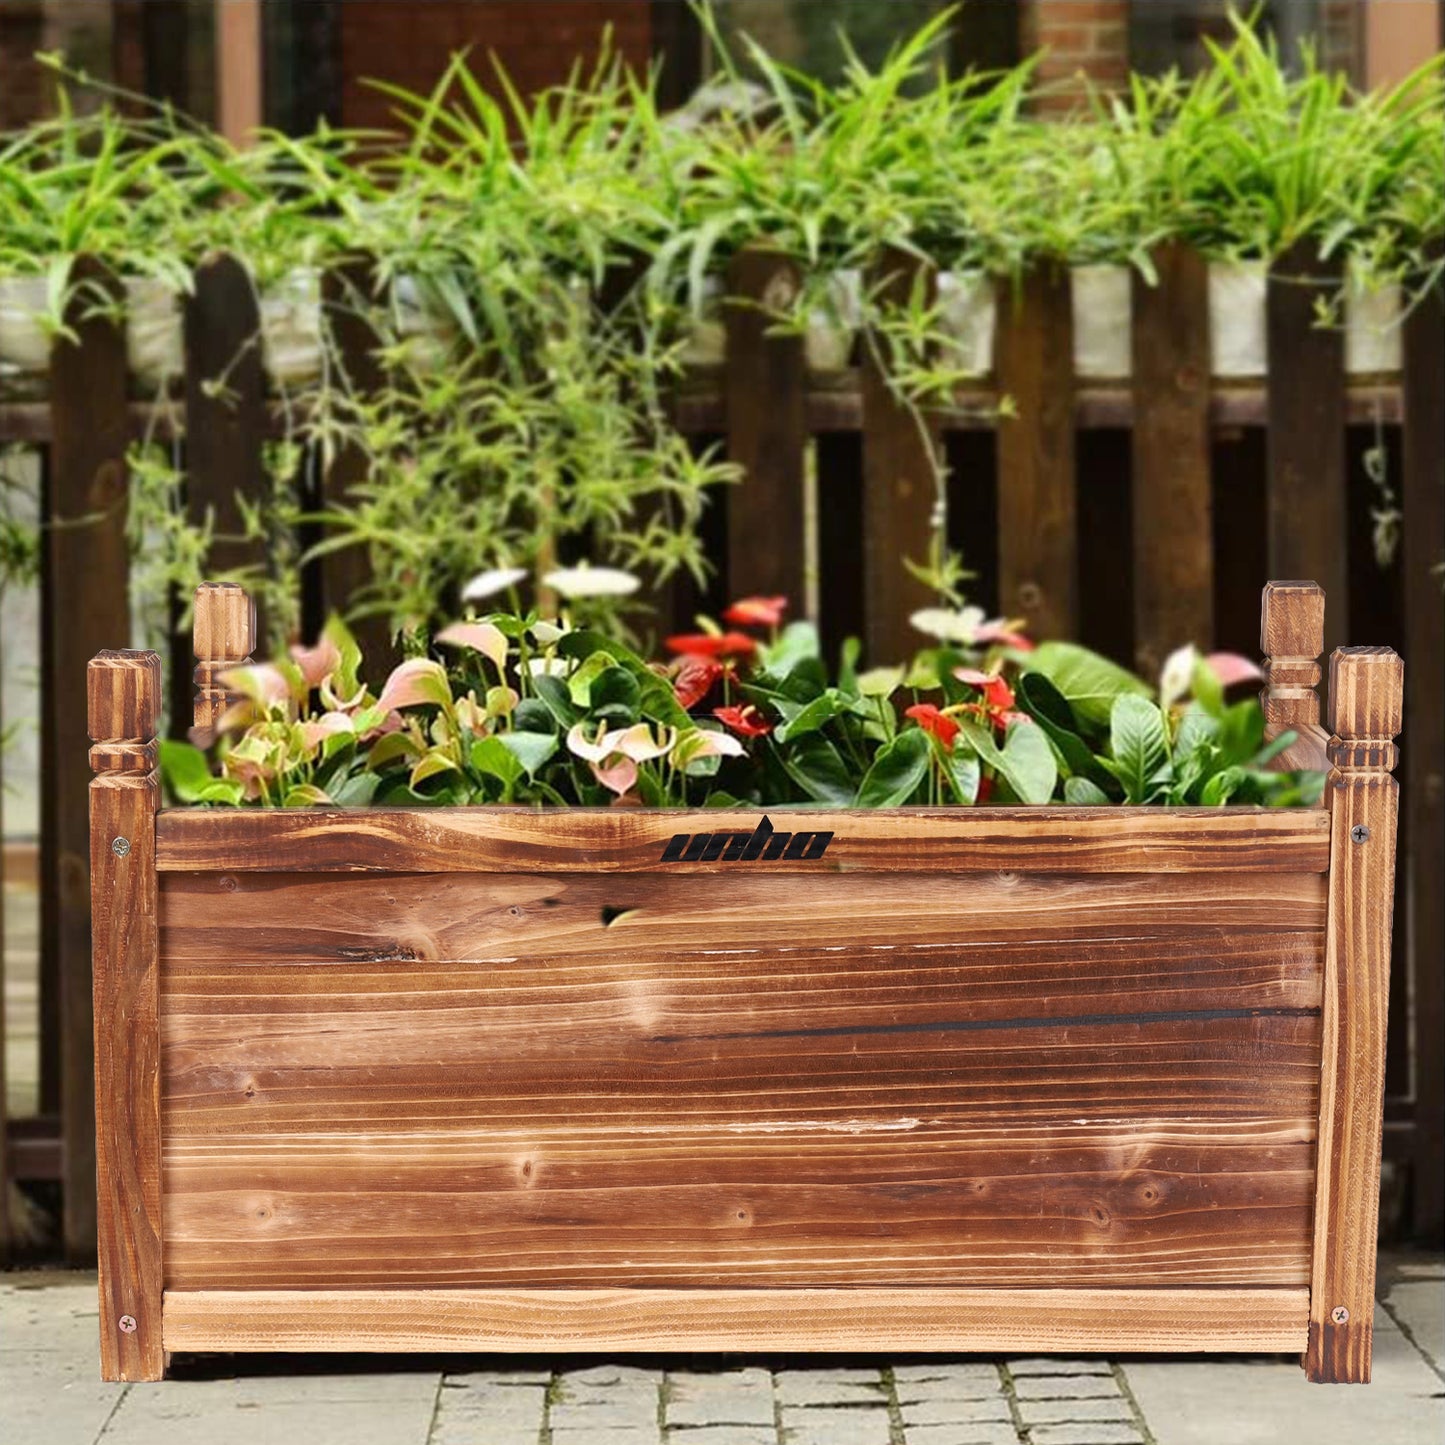 Wooden Vegetable Planter Bed -Medium